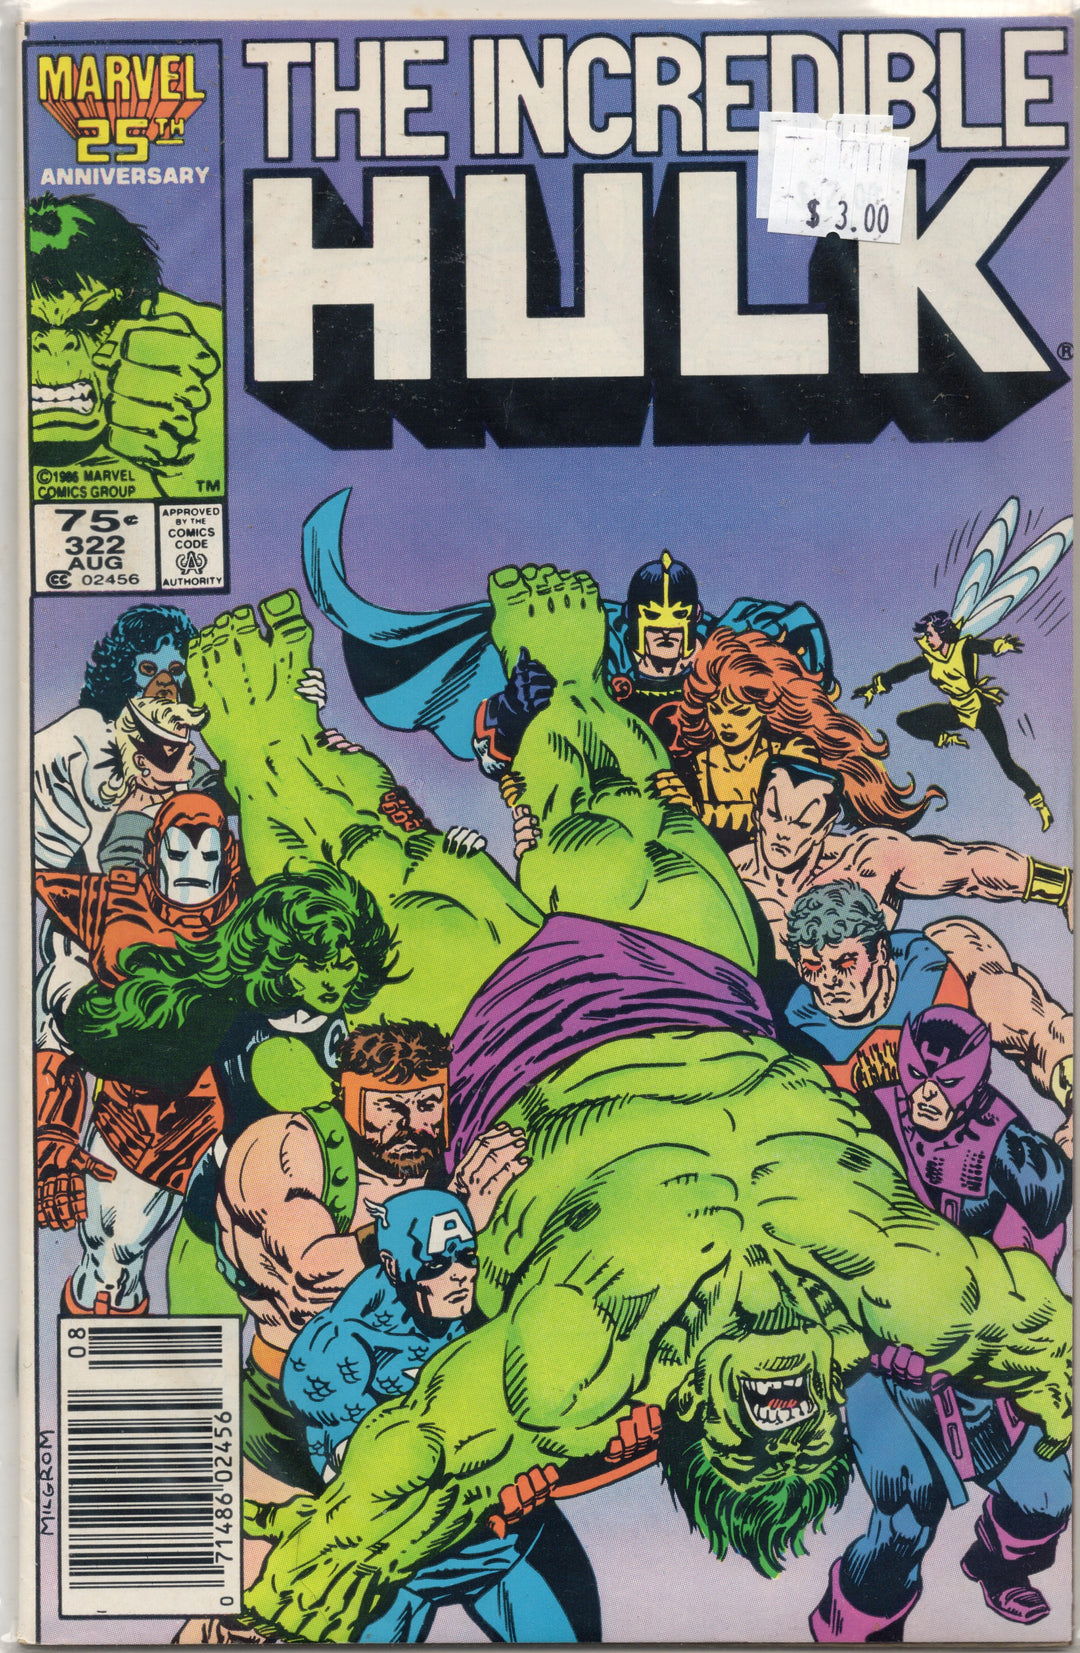 The Incredible Hulk #322